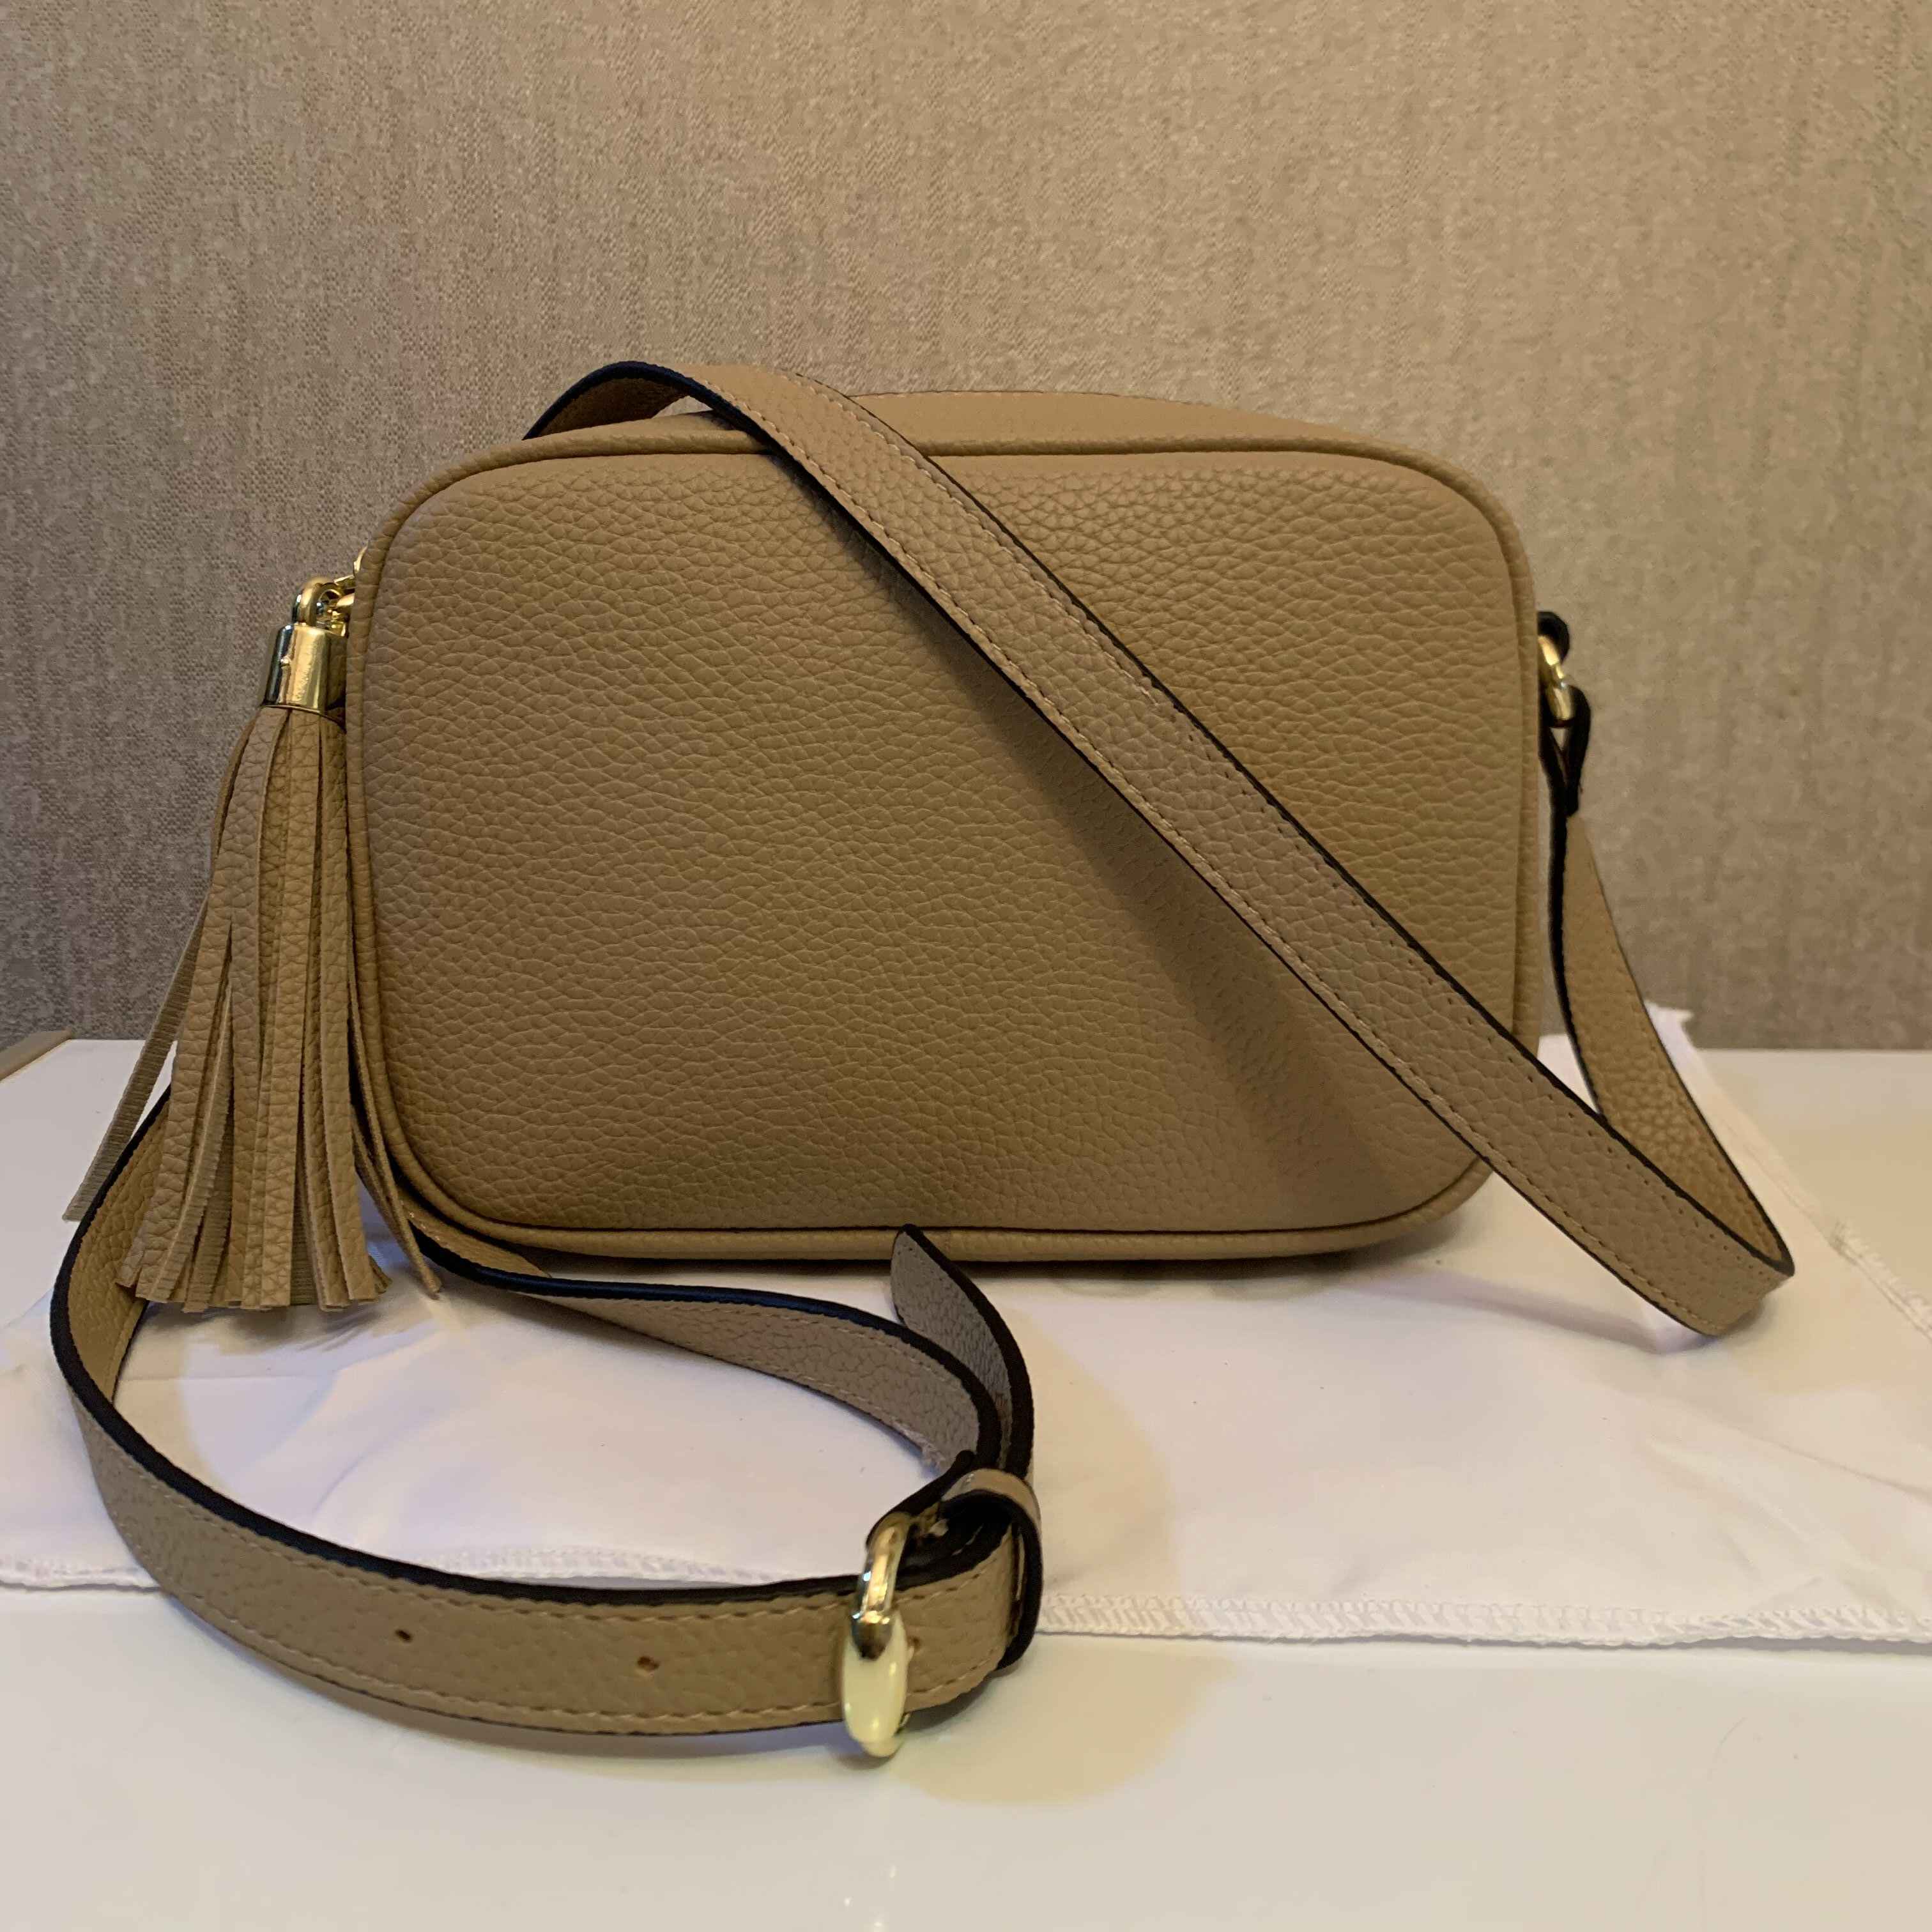 

Top Quality Handbags Wallet Handbag Women Handbags Bags Crossbody Soho Bag Disco Shoulder Bag Fringed Messenger Bags Purse 22cm 308364, Dust bag packaging (not sold separately)